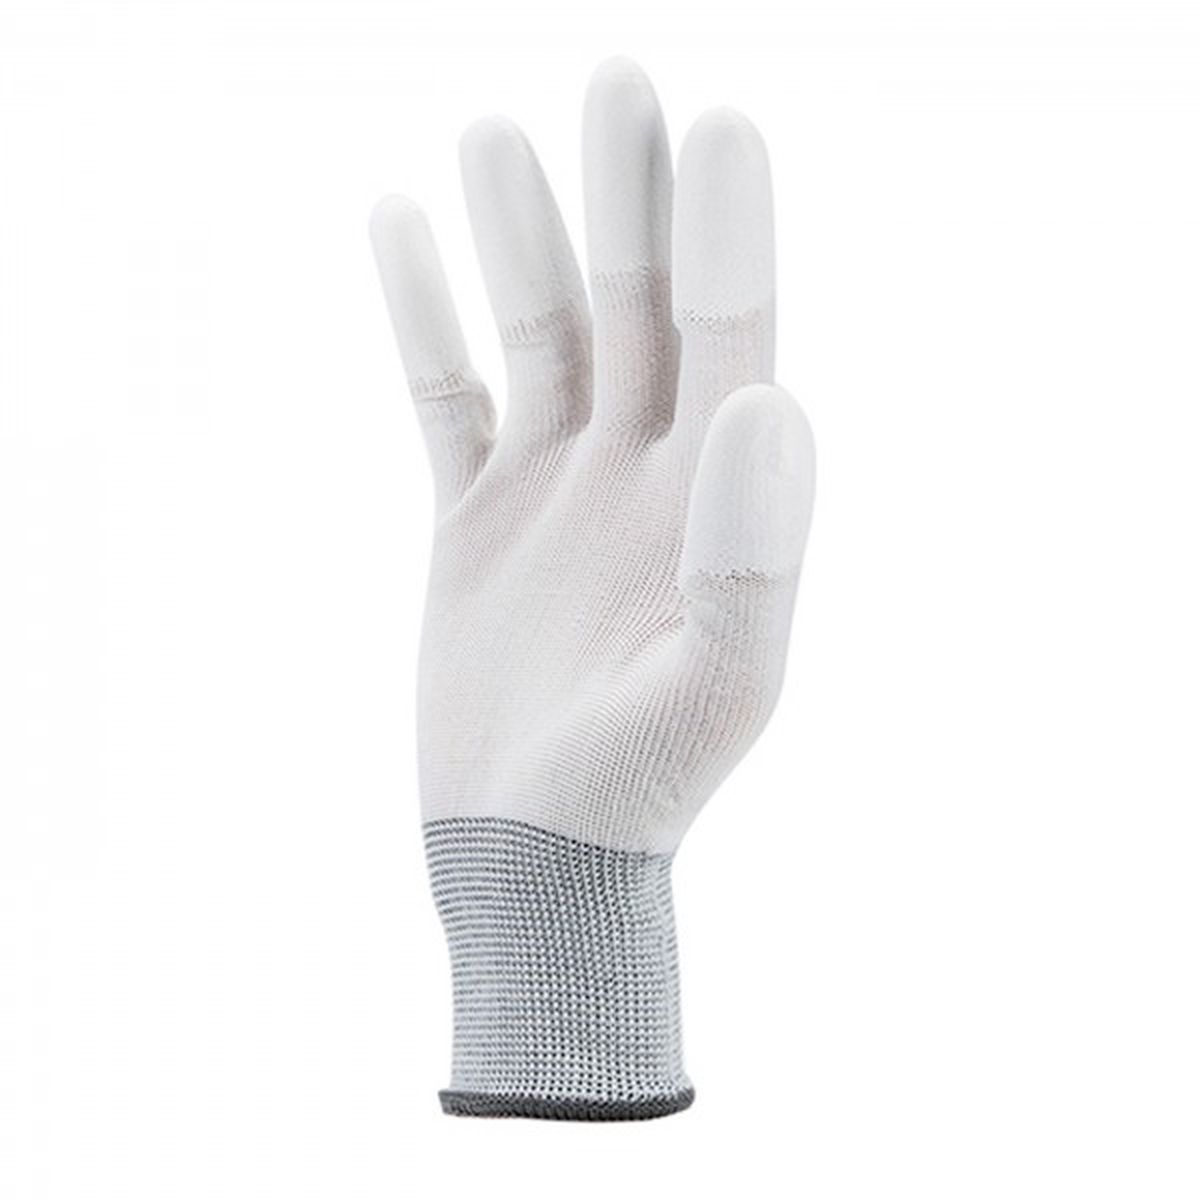 JJC G-01 Antistatik-Handschuhe, 1 Paar